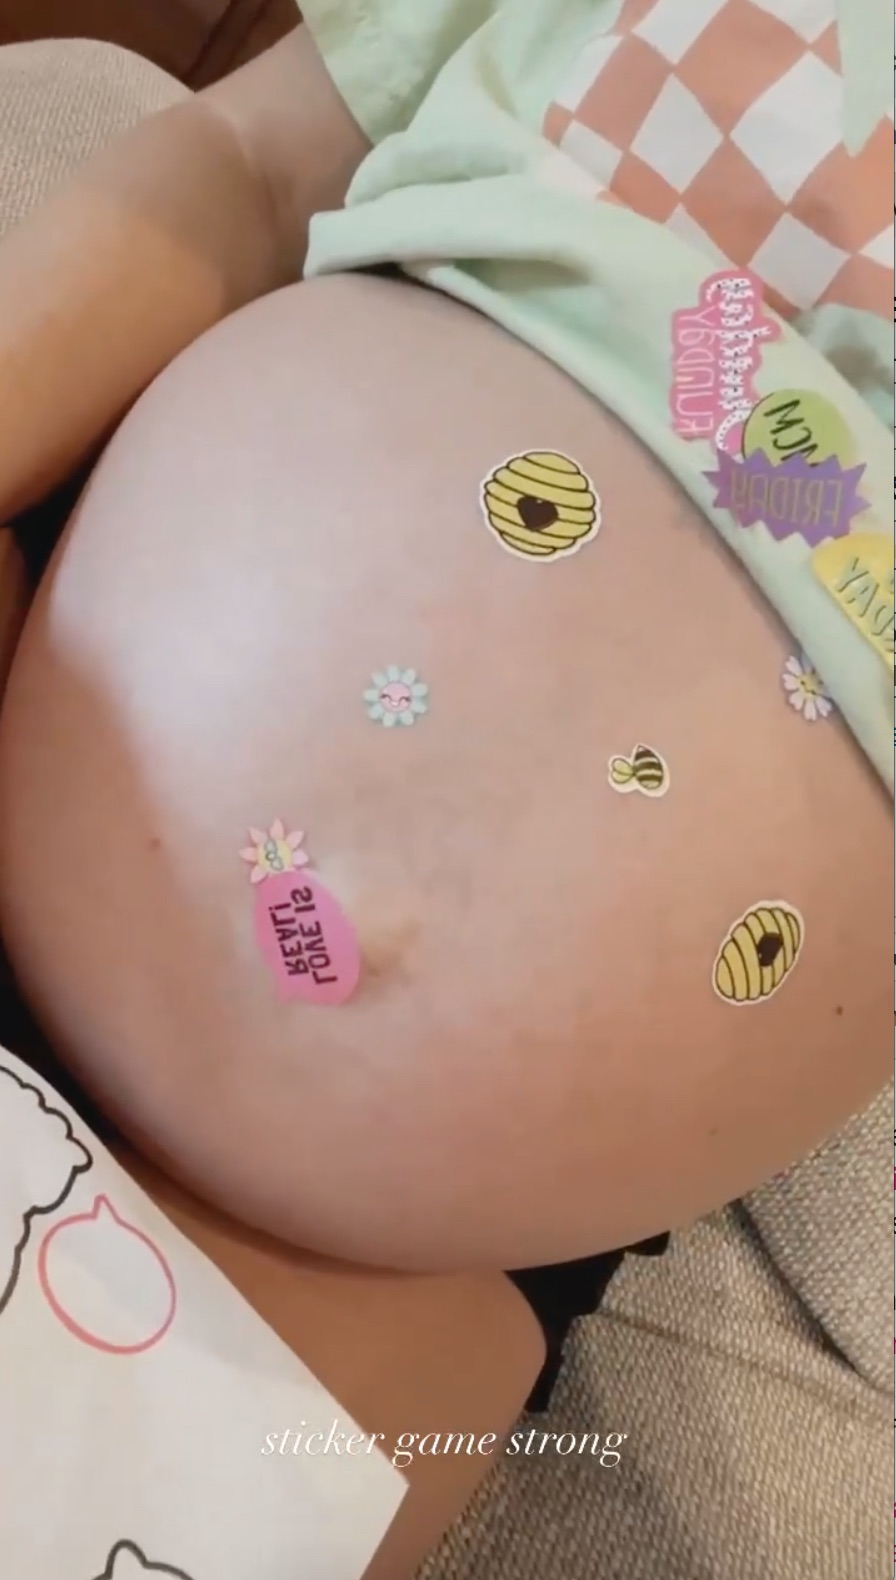 Bachelor's Lauren Burnham’s Baby Bump Album Ahead of Welcoming Twins: Pregnancy Pics Sticker Game Strong